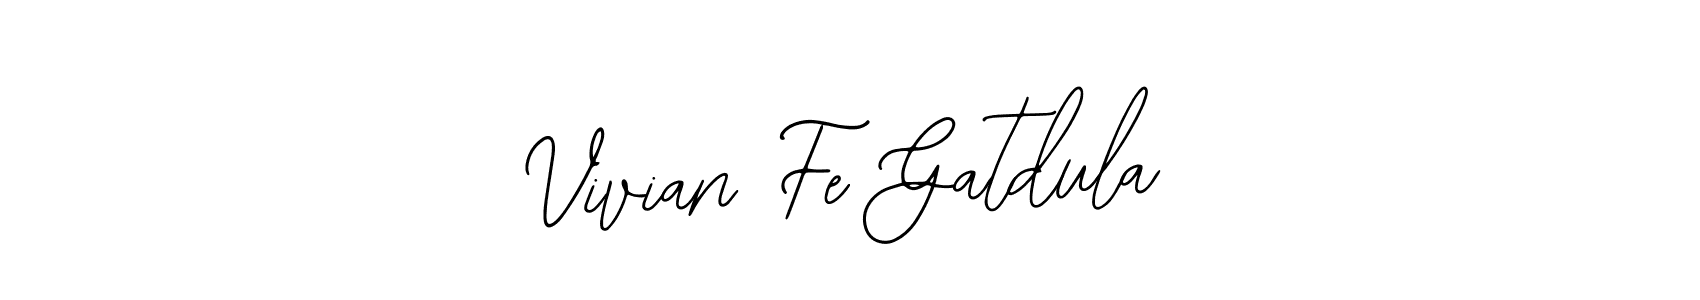 Make a beautiful signature design for name Vivian Fe Gatdula. Use this online signature maker to create a handwritten signature for free. Vivian Fe Gatdula signature style 12 images and pictures png